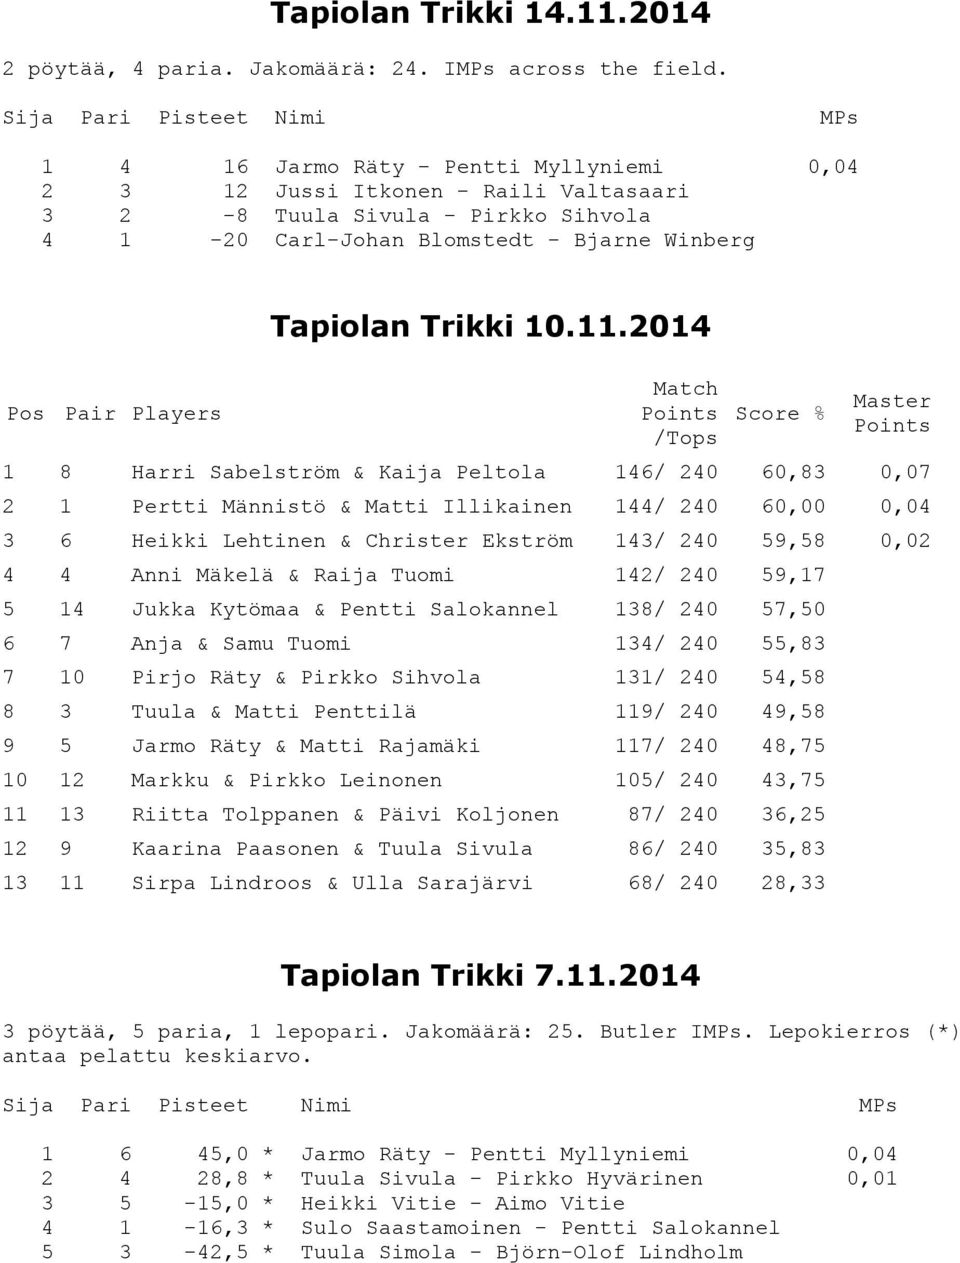 Players Tapiolan Trikki 10.11.